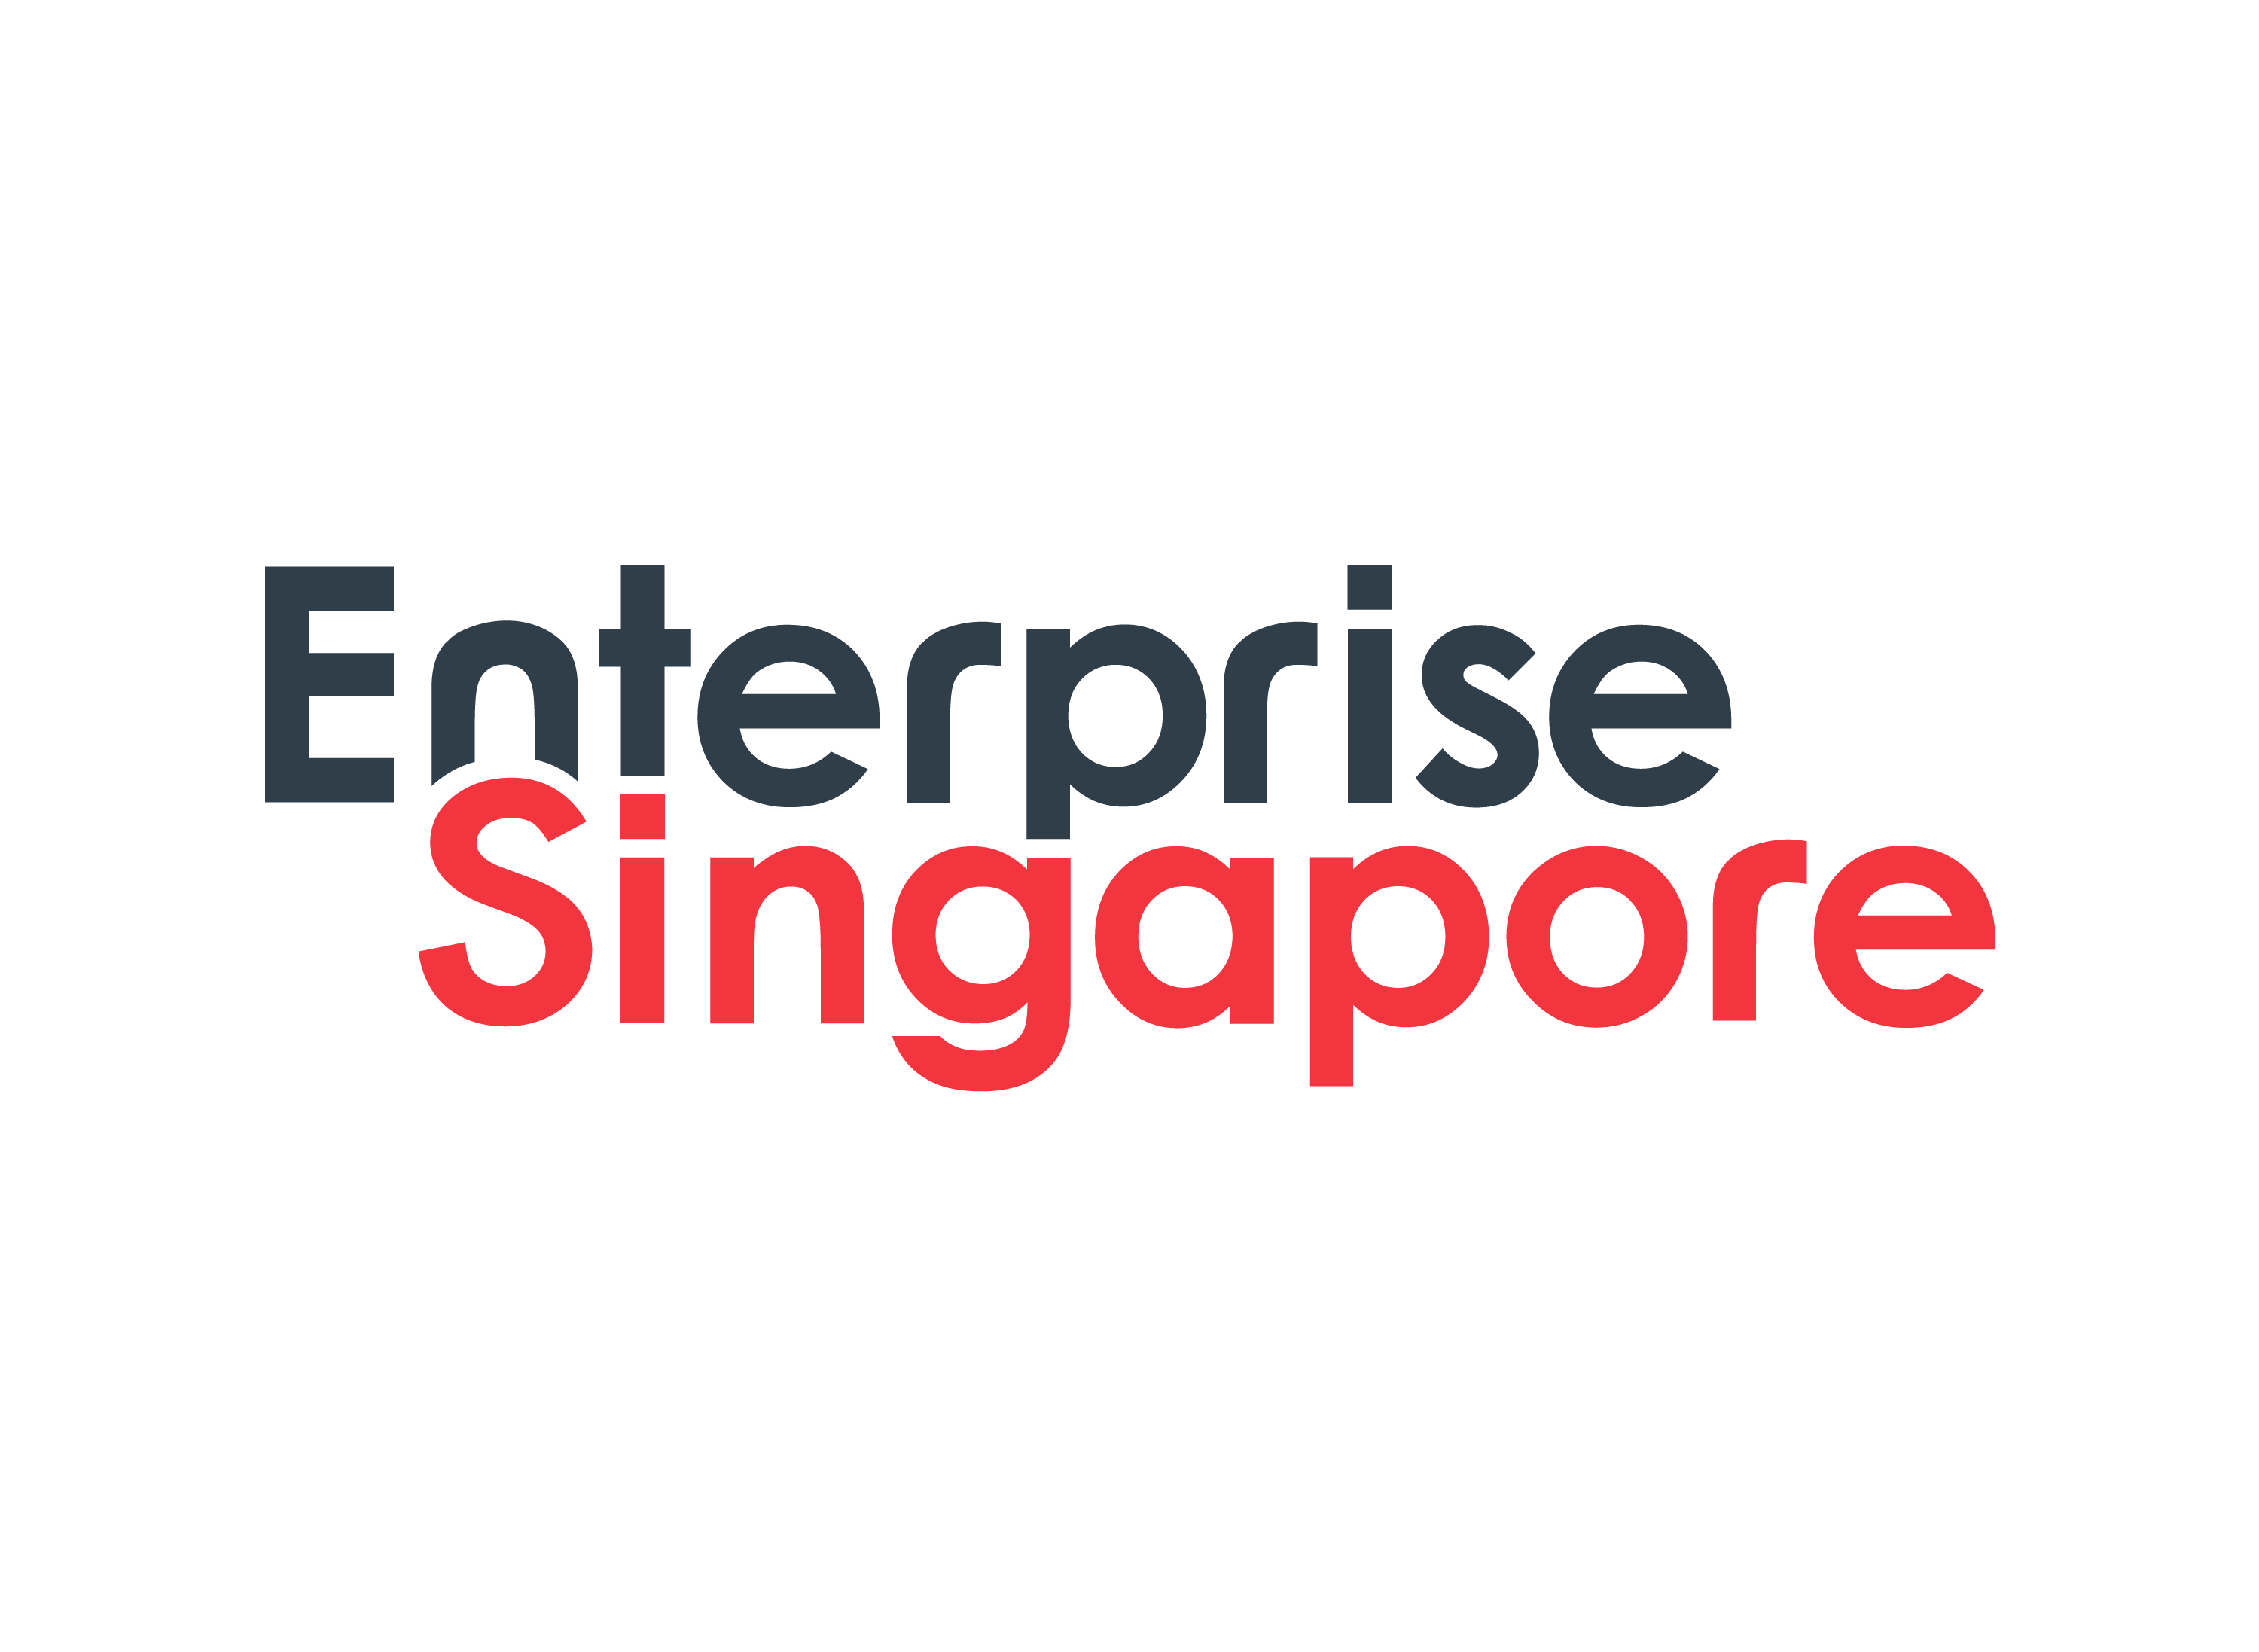 enterprise singapore